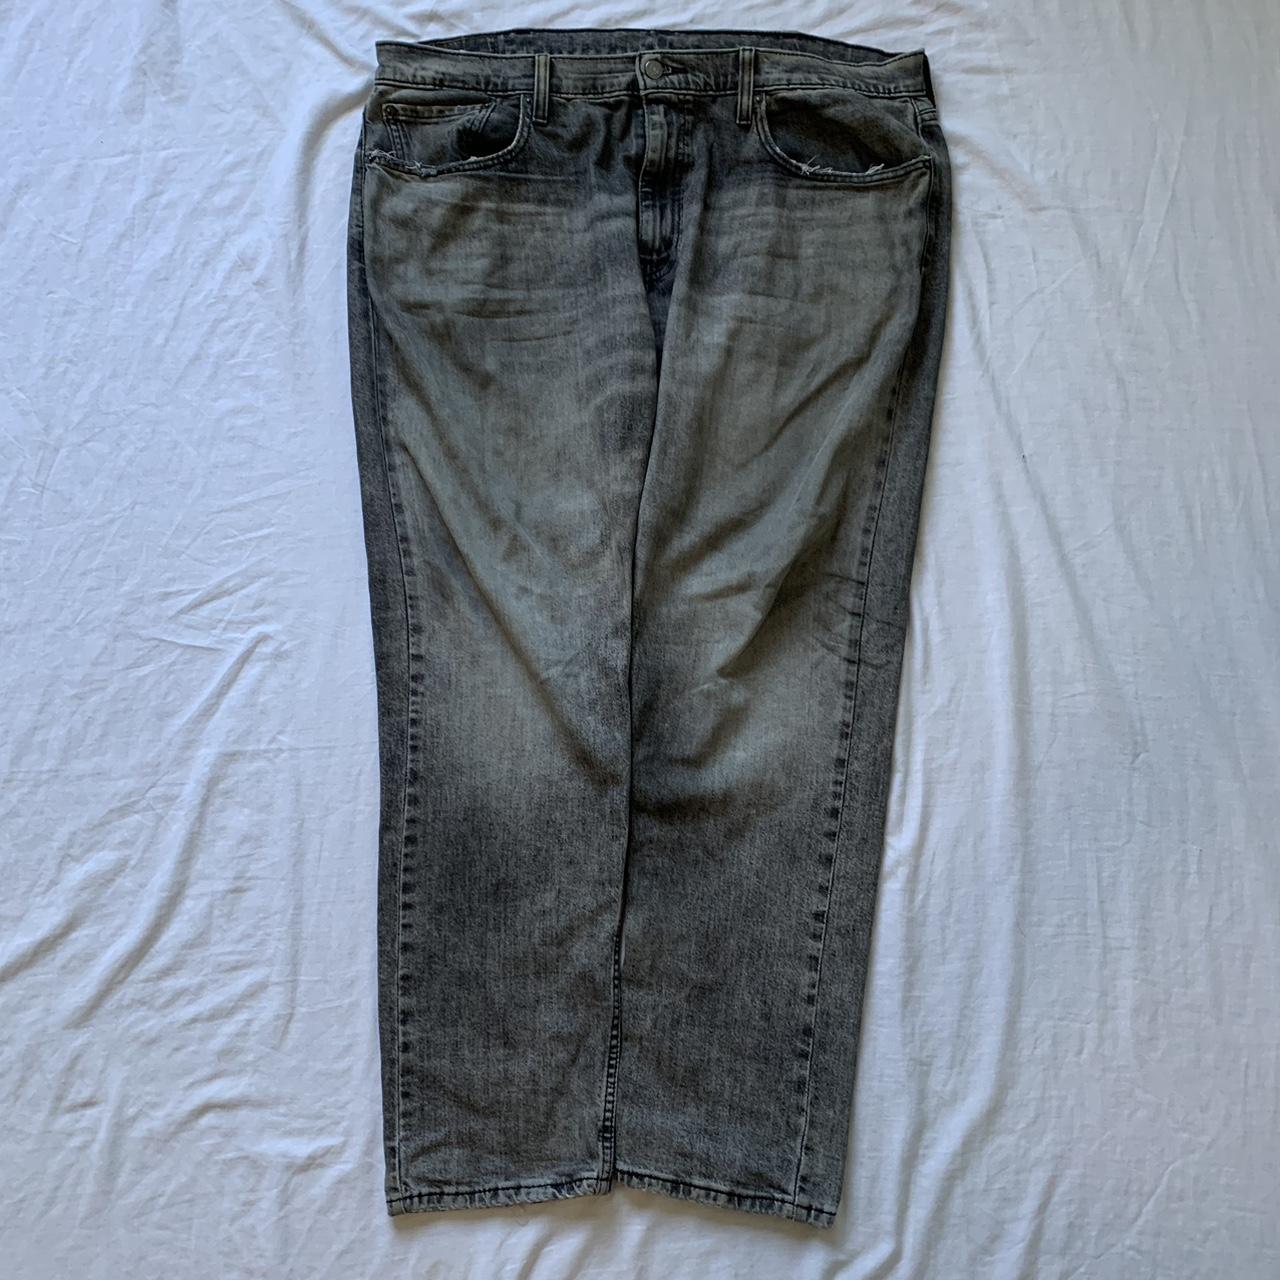 Mens levi’s black faded jeans measurements shown in... - Depop